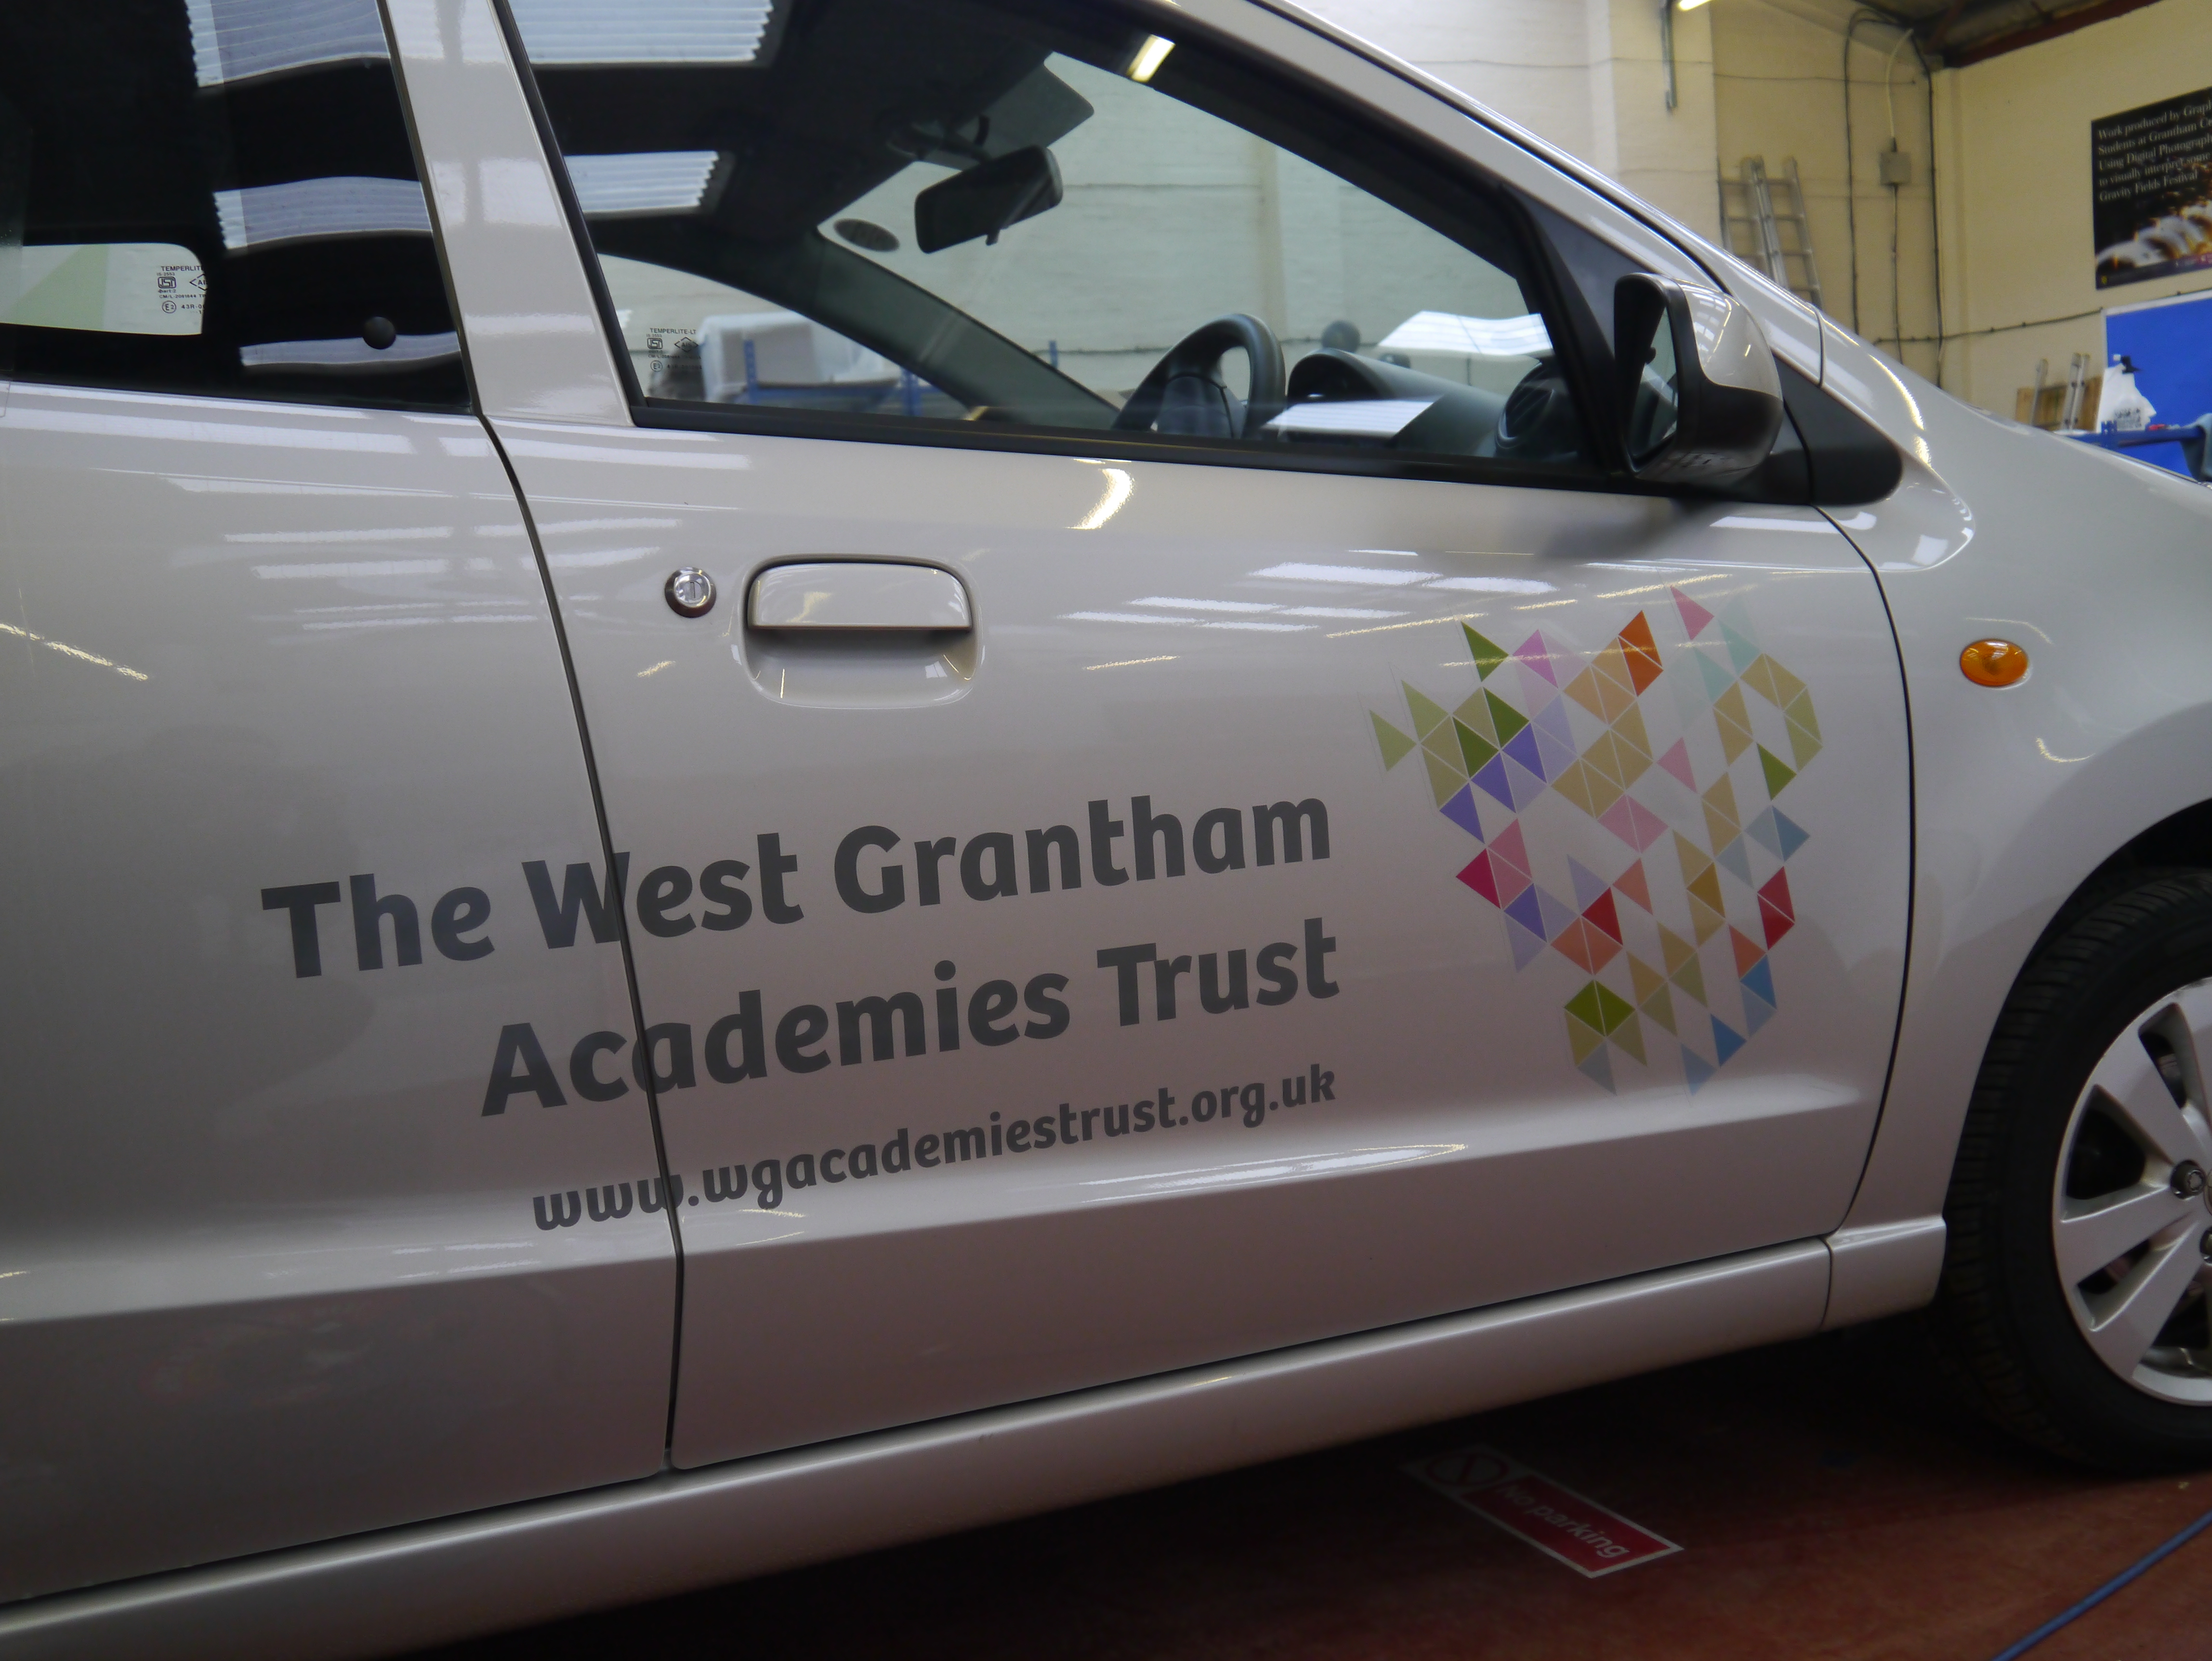 Vehicle Graphics for West Grantham Academies Trust